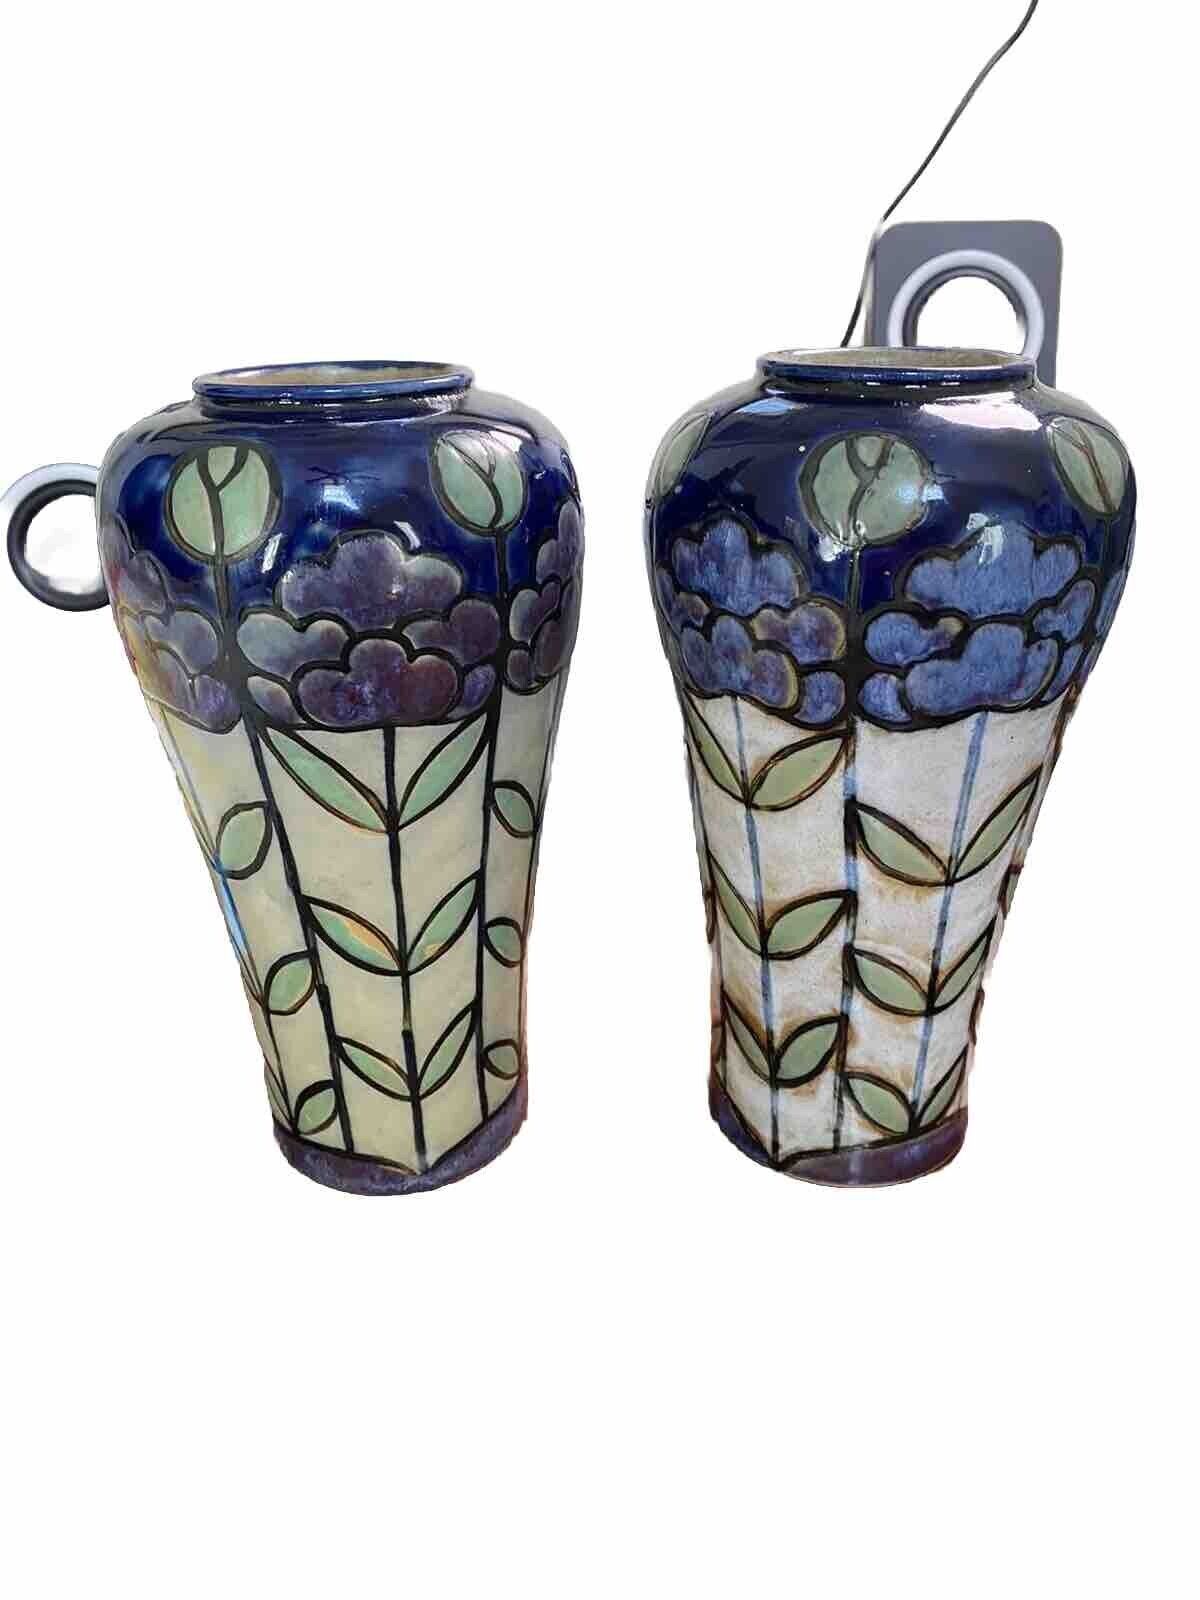 Gorgeous Pair Of Antique Royal Doulton “New Style” Vases